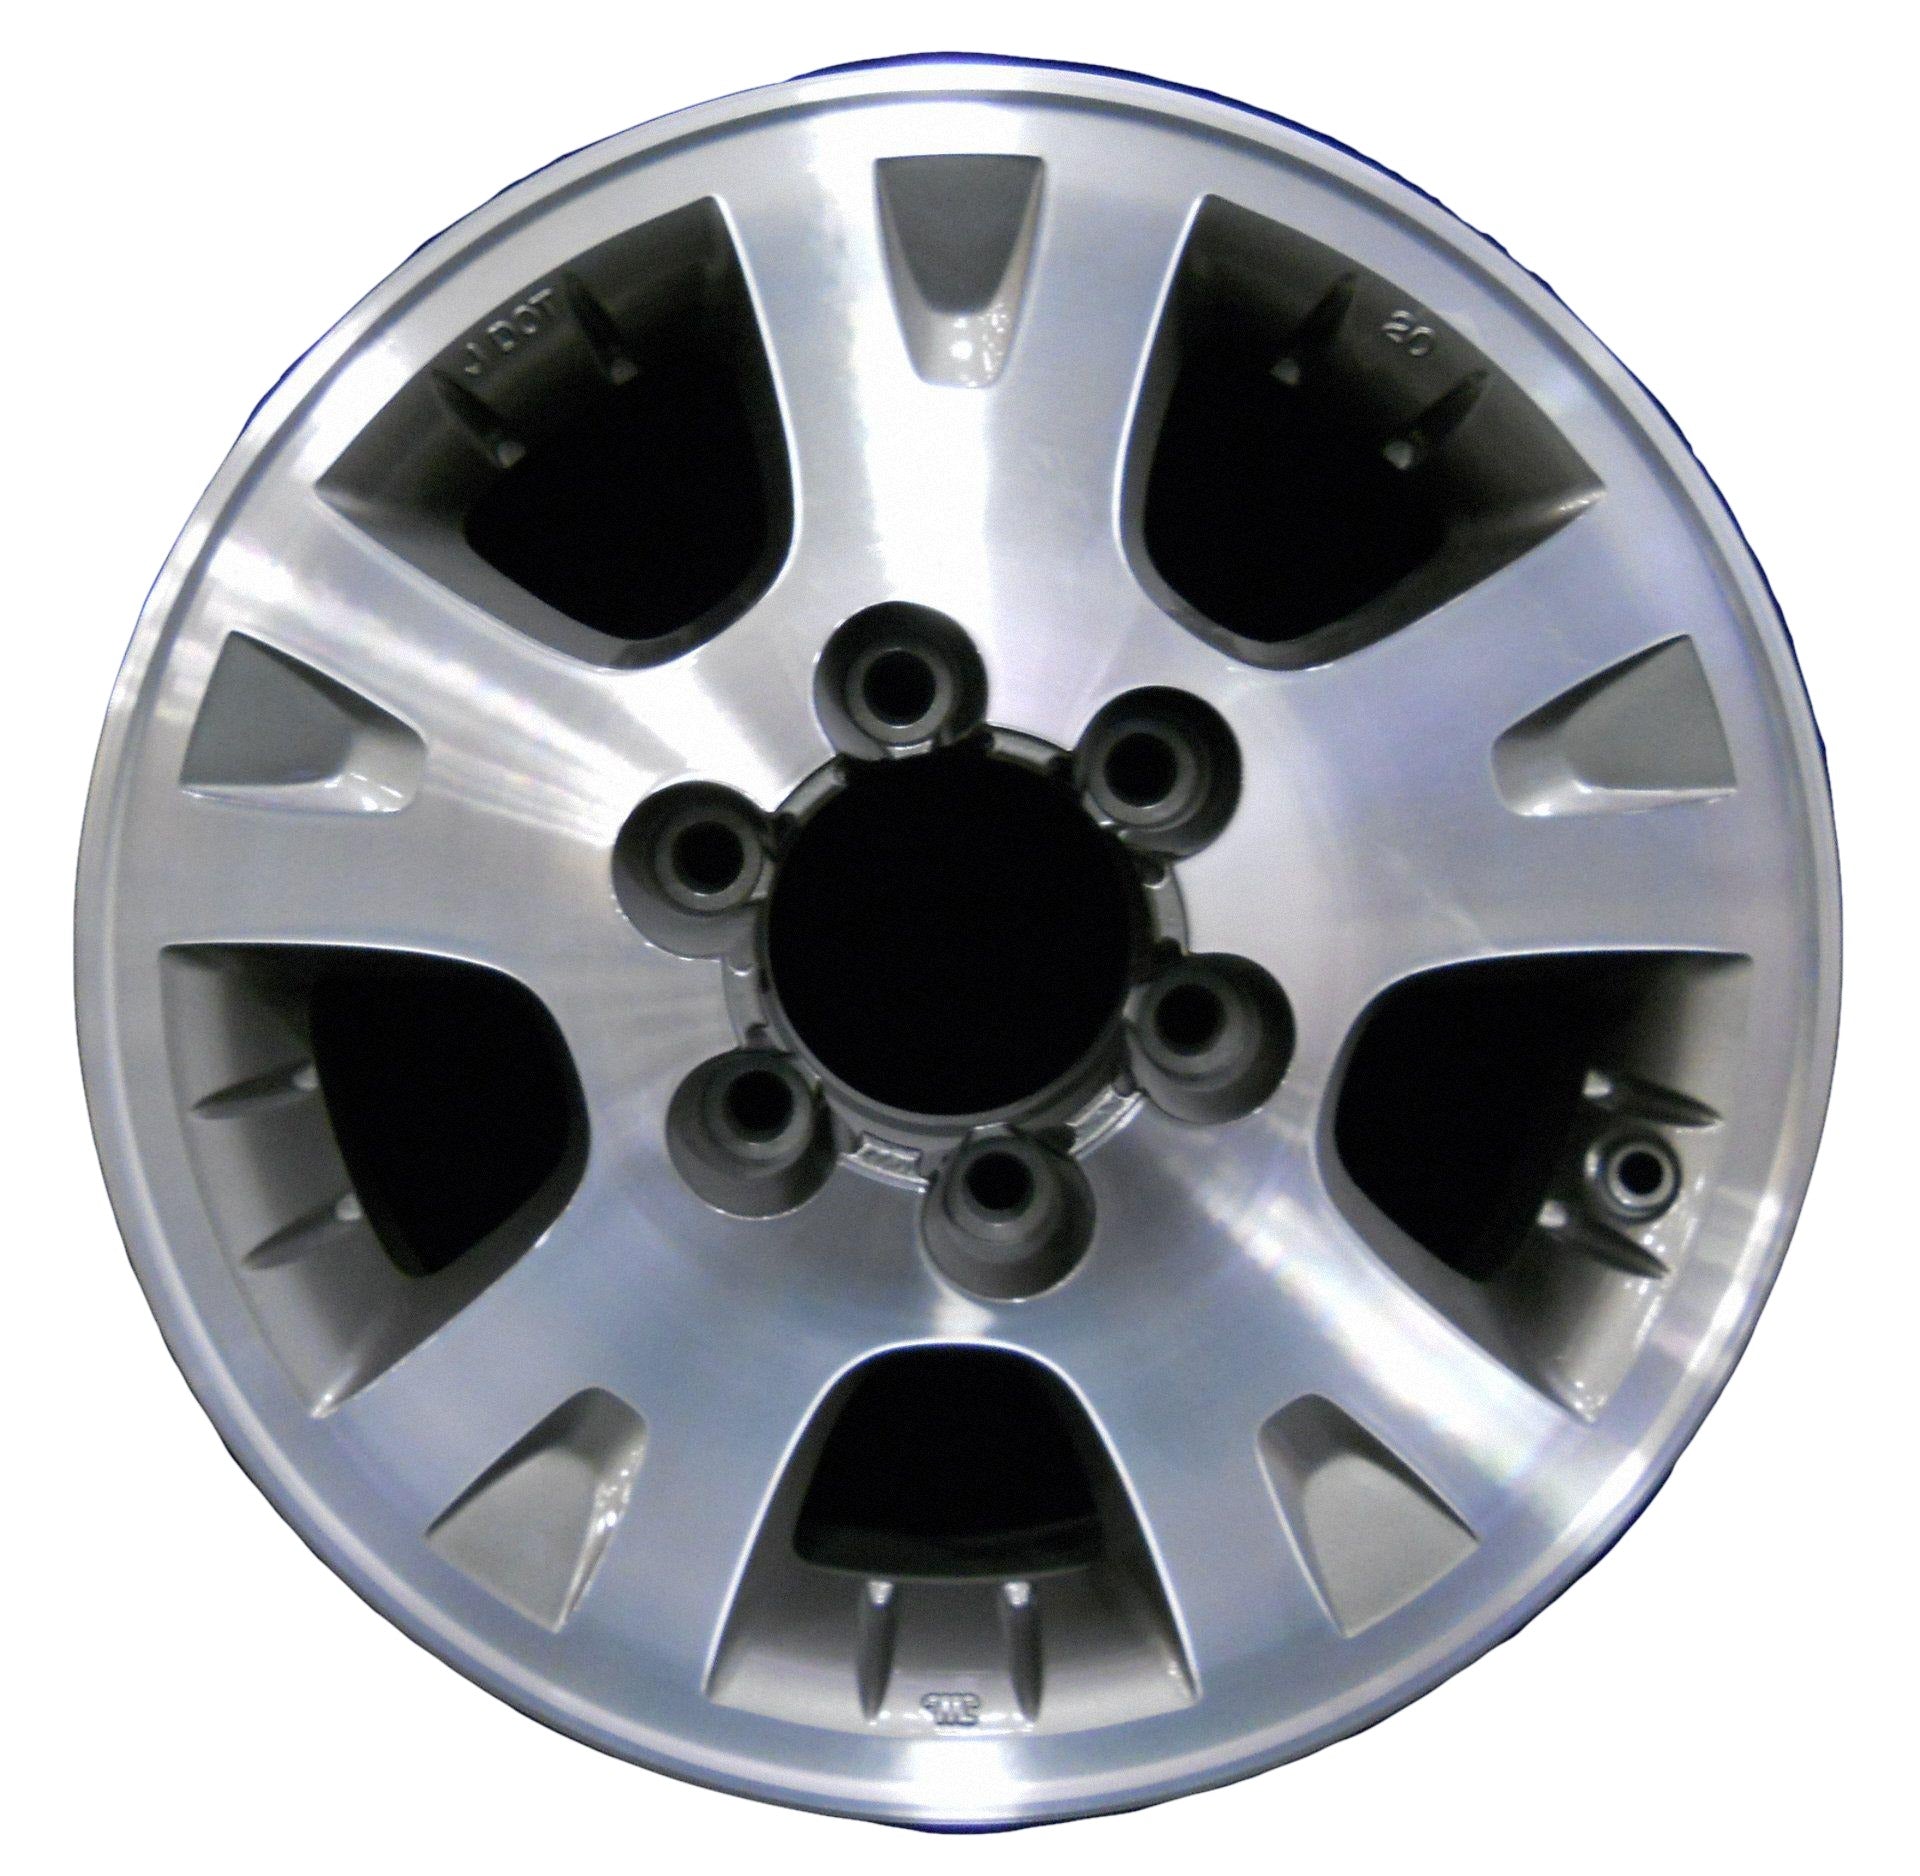 Nissan Pathfinder  1999, 2000, 2001 Factory OEM Car Wheel Size 16x7 Alloy WAO.62370.LC19.MA